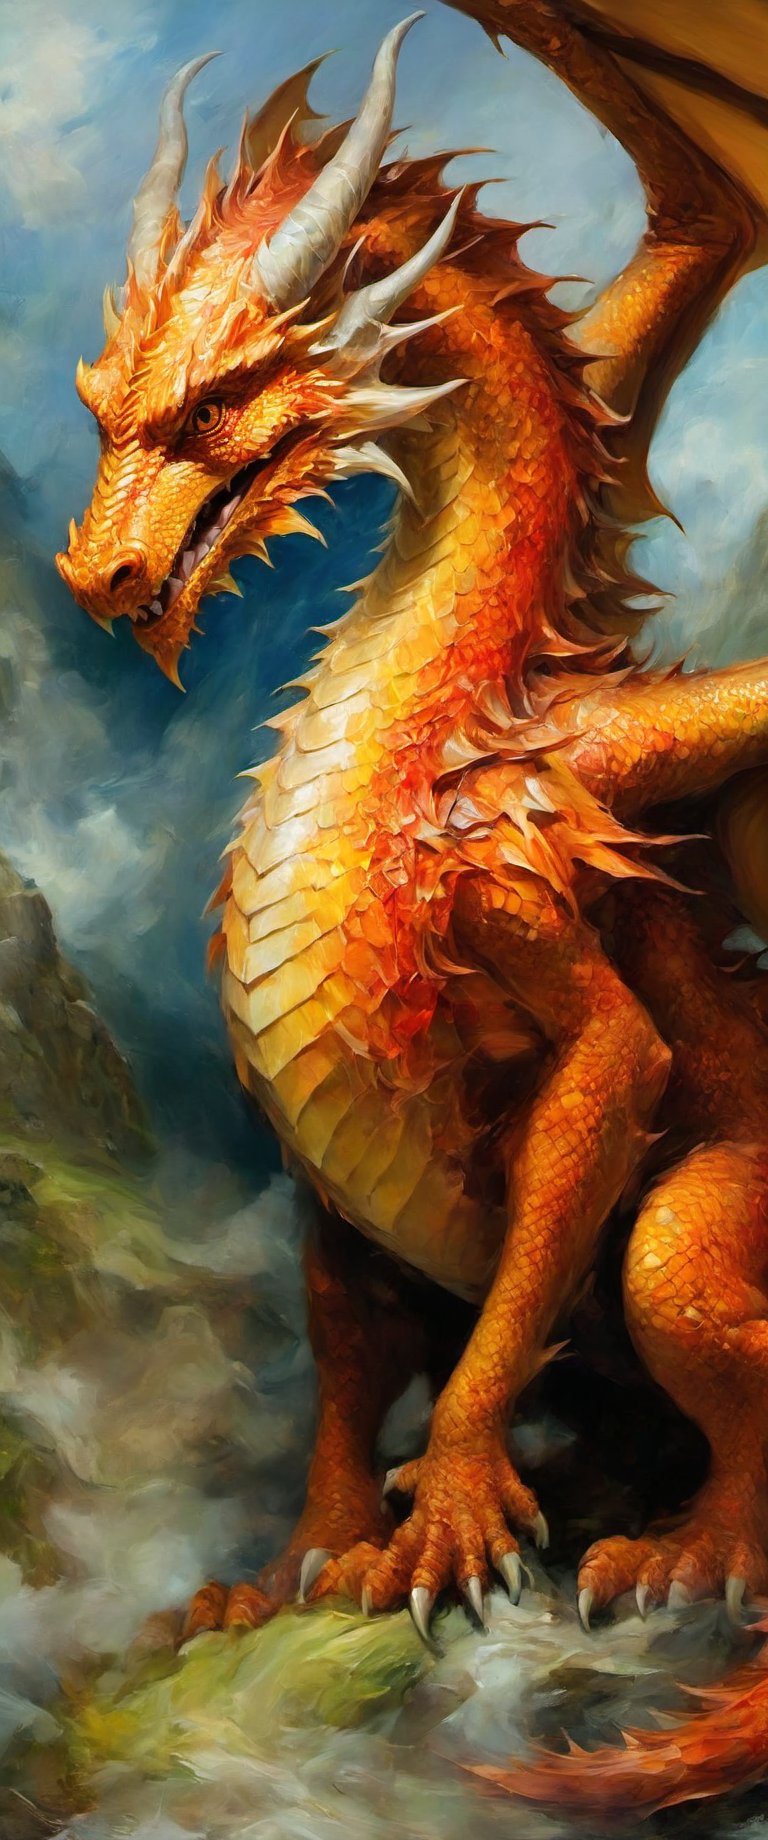 Deception of a medival  dragon salyer. darl, raw,oil paint